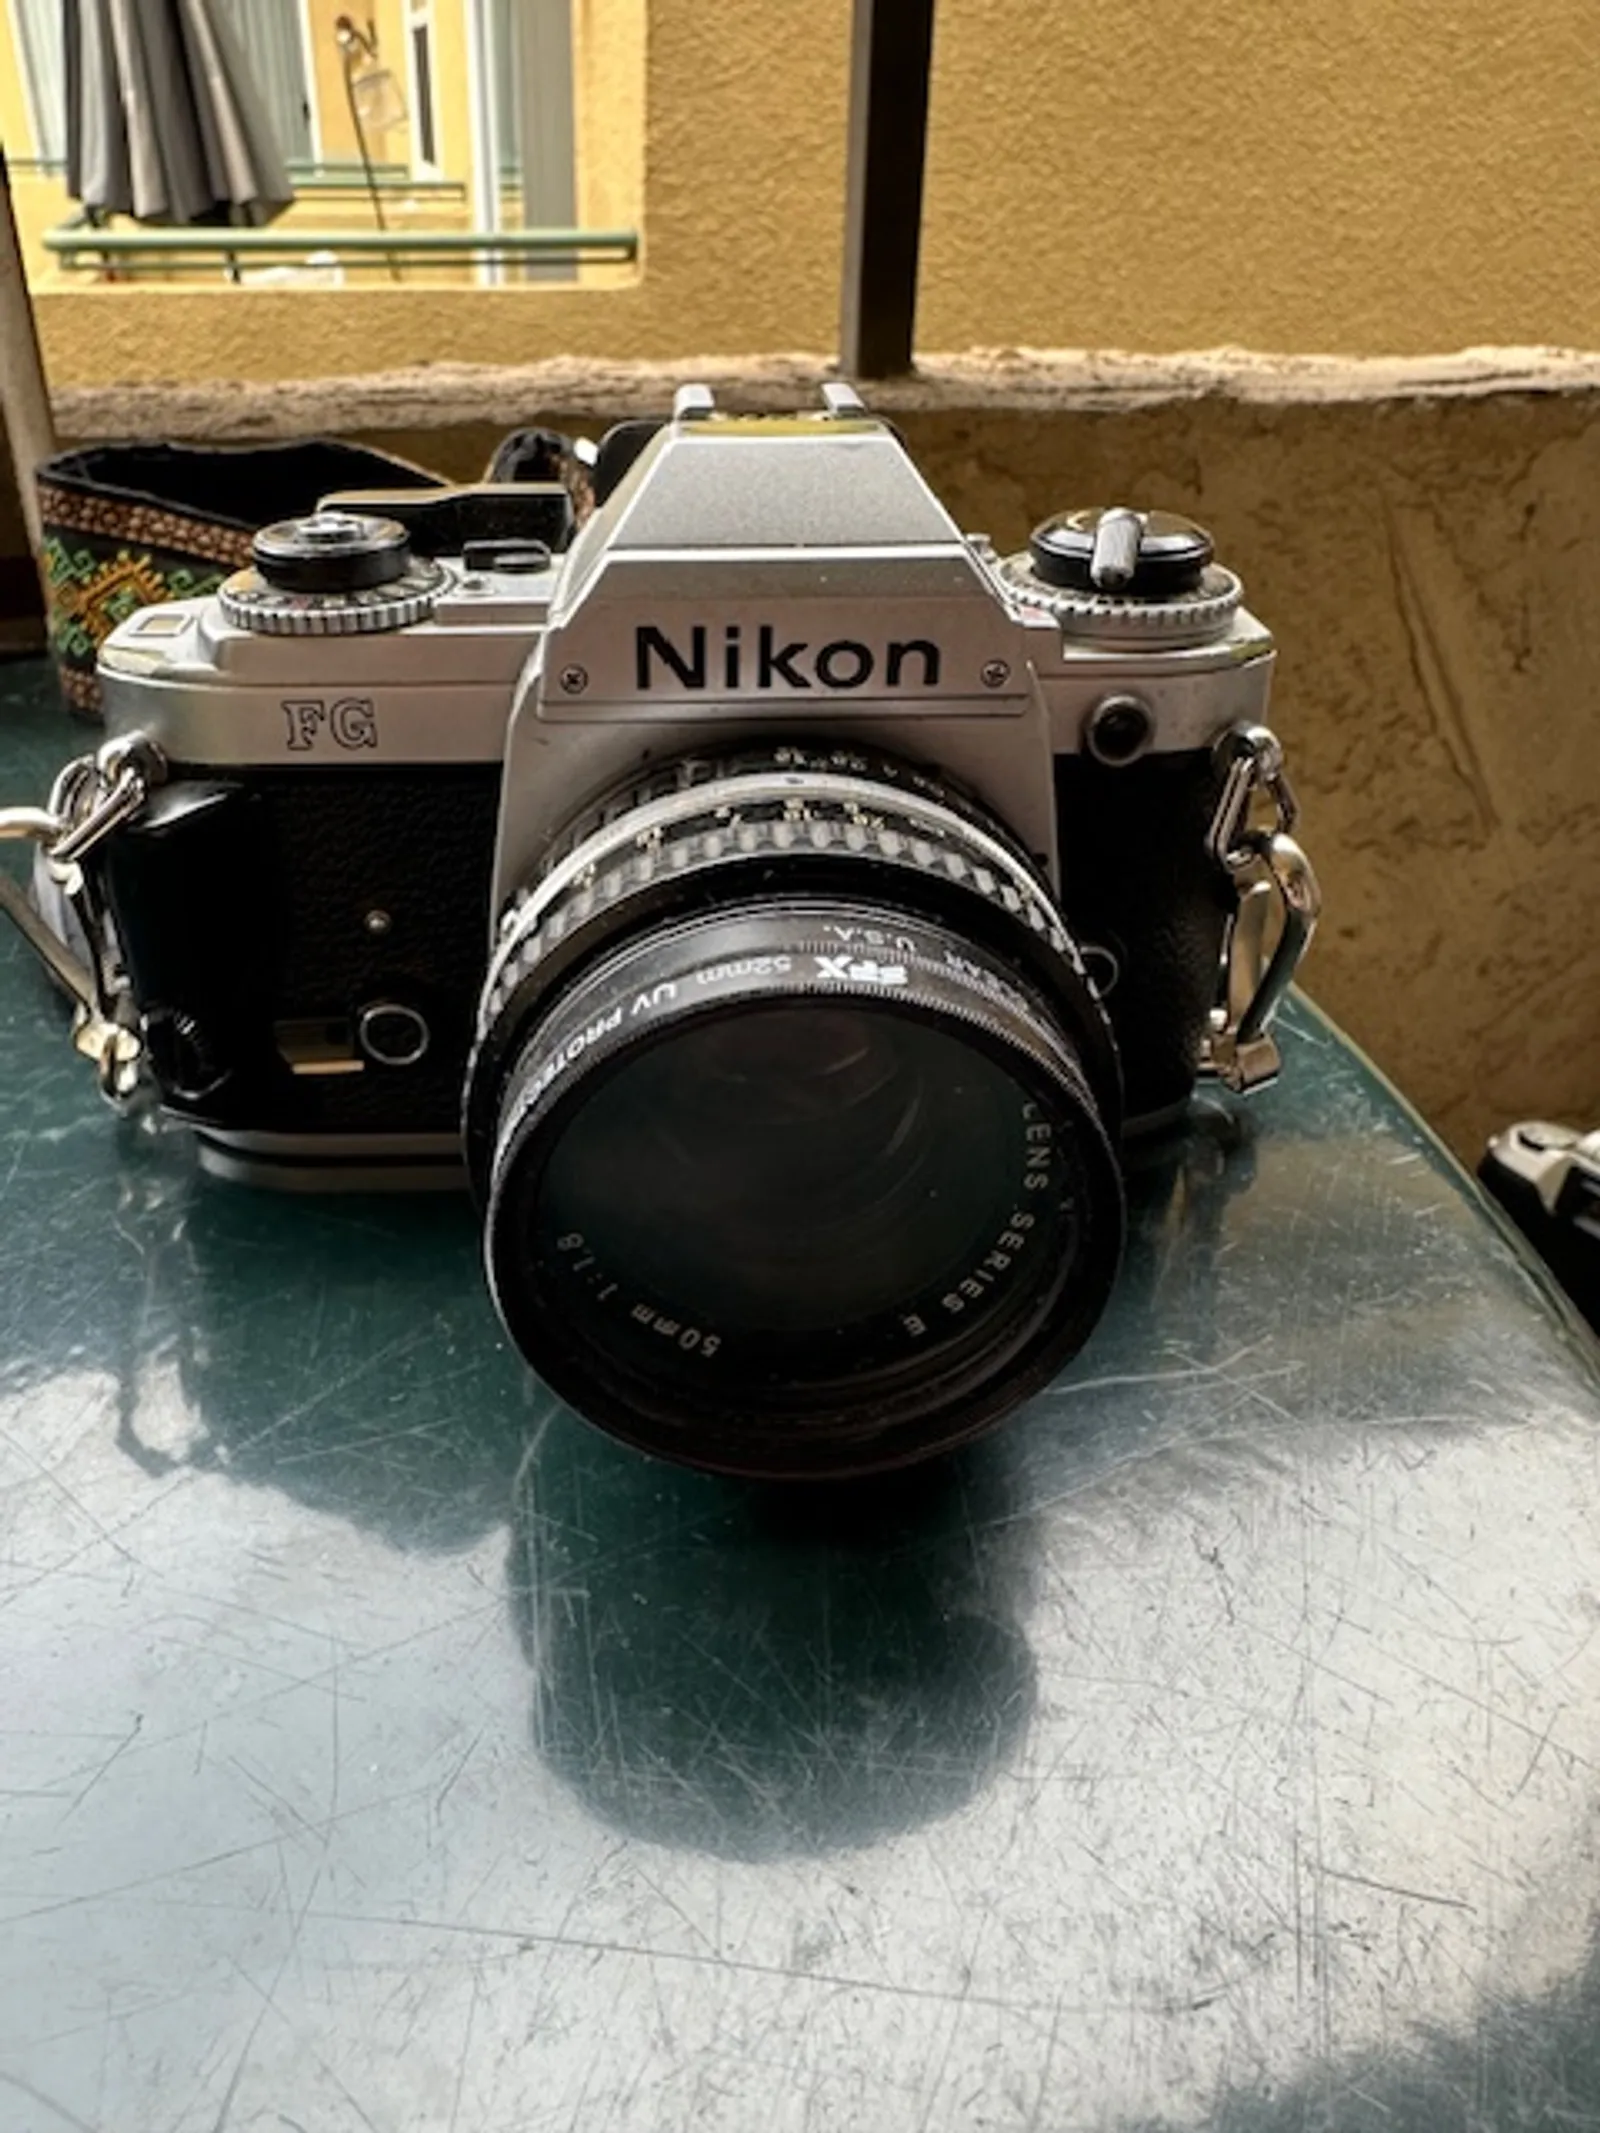 Nikon FG Film Camera with 50 mm, 1:1.8